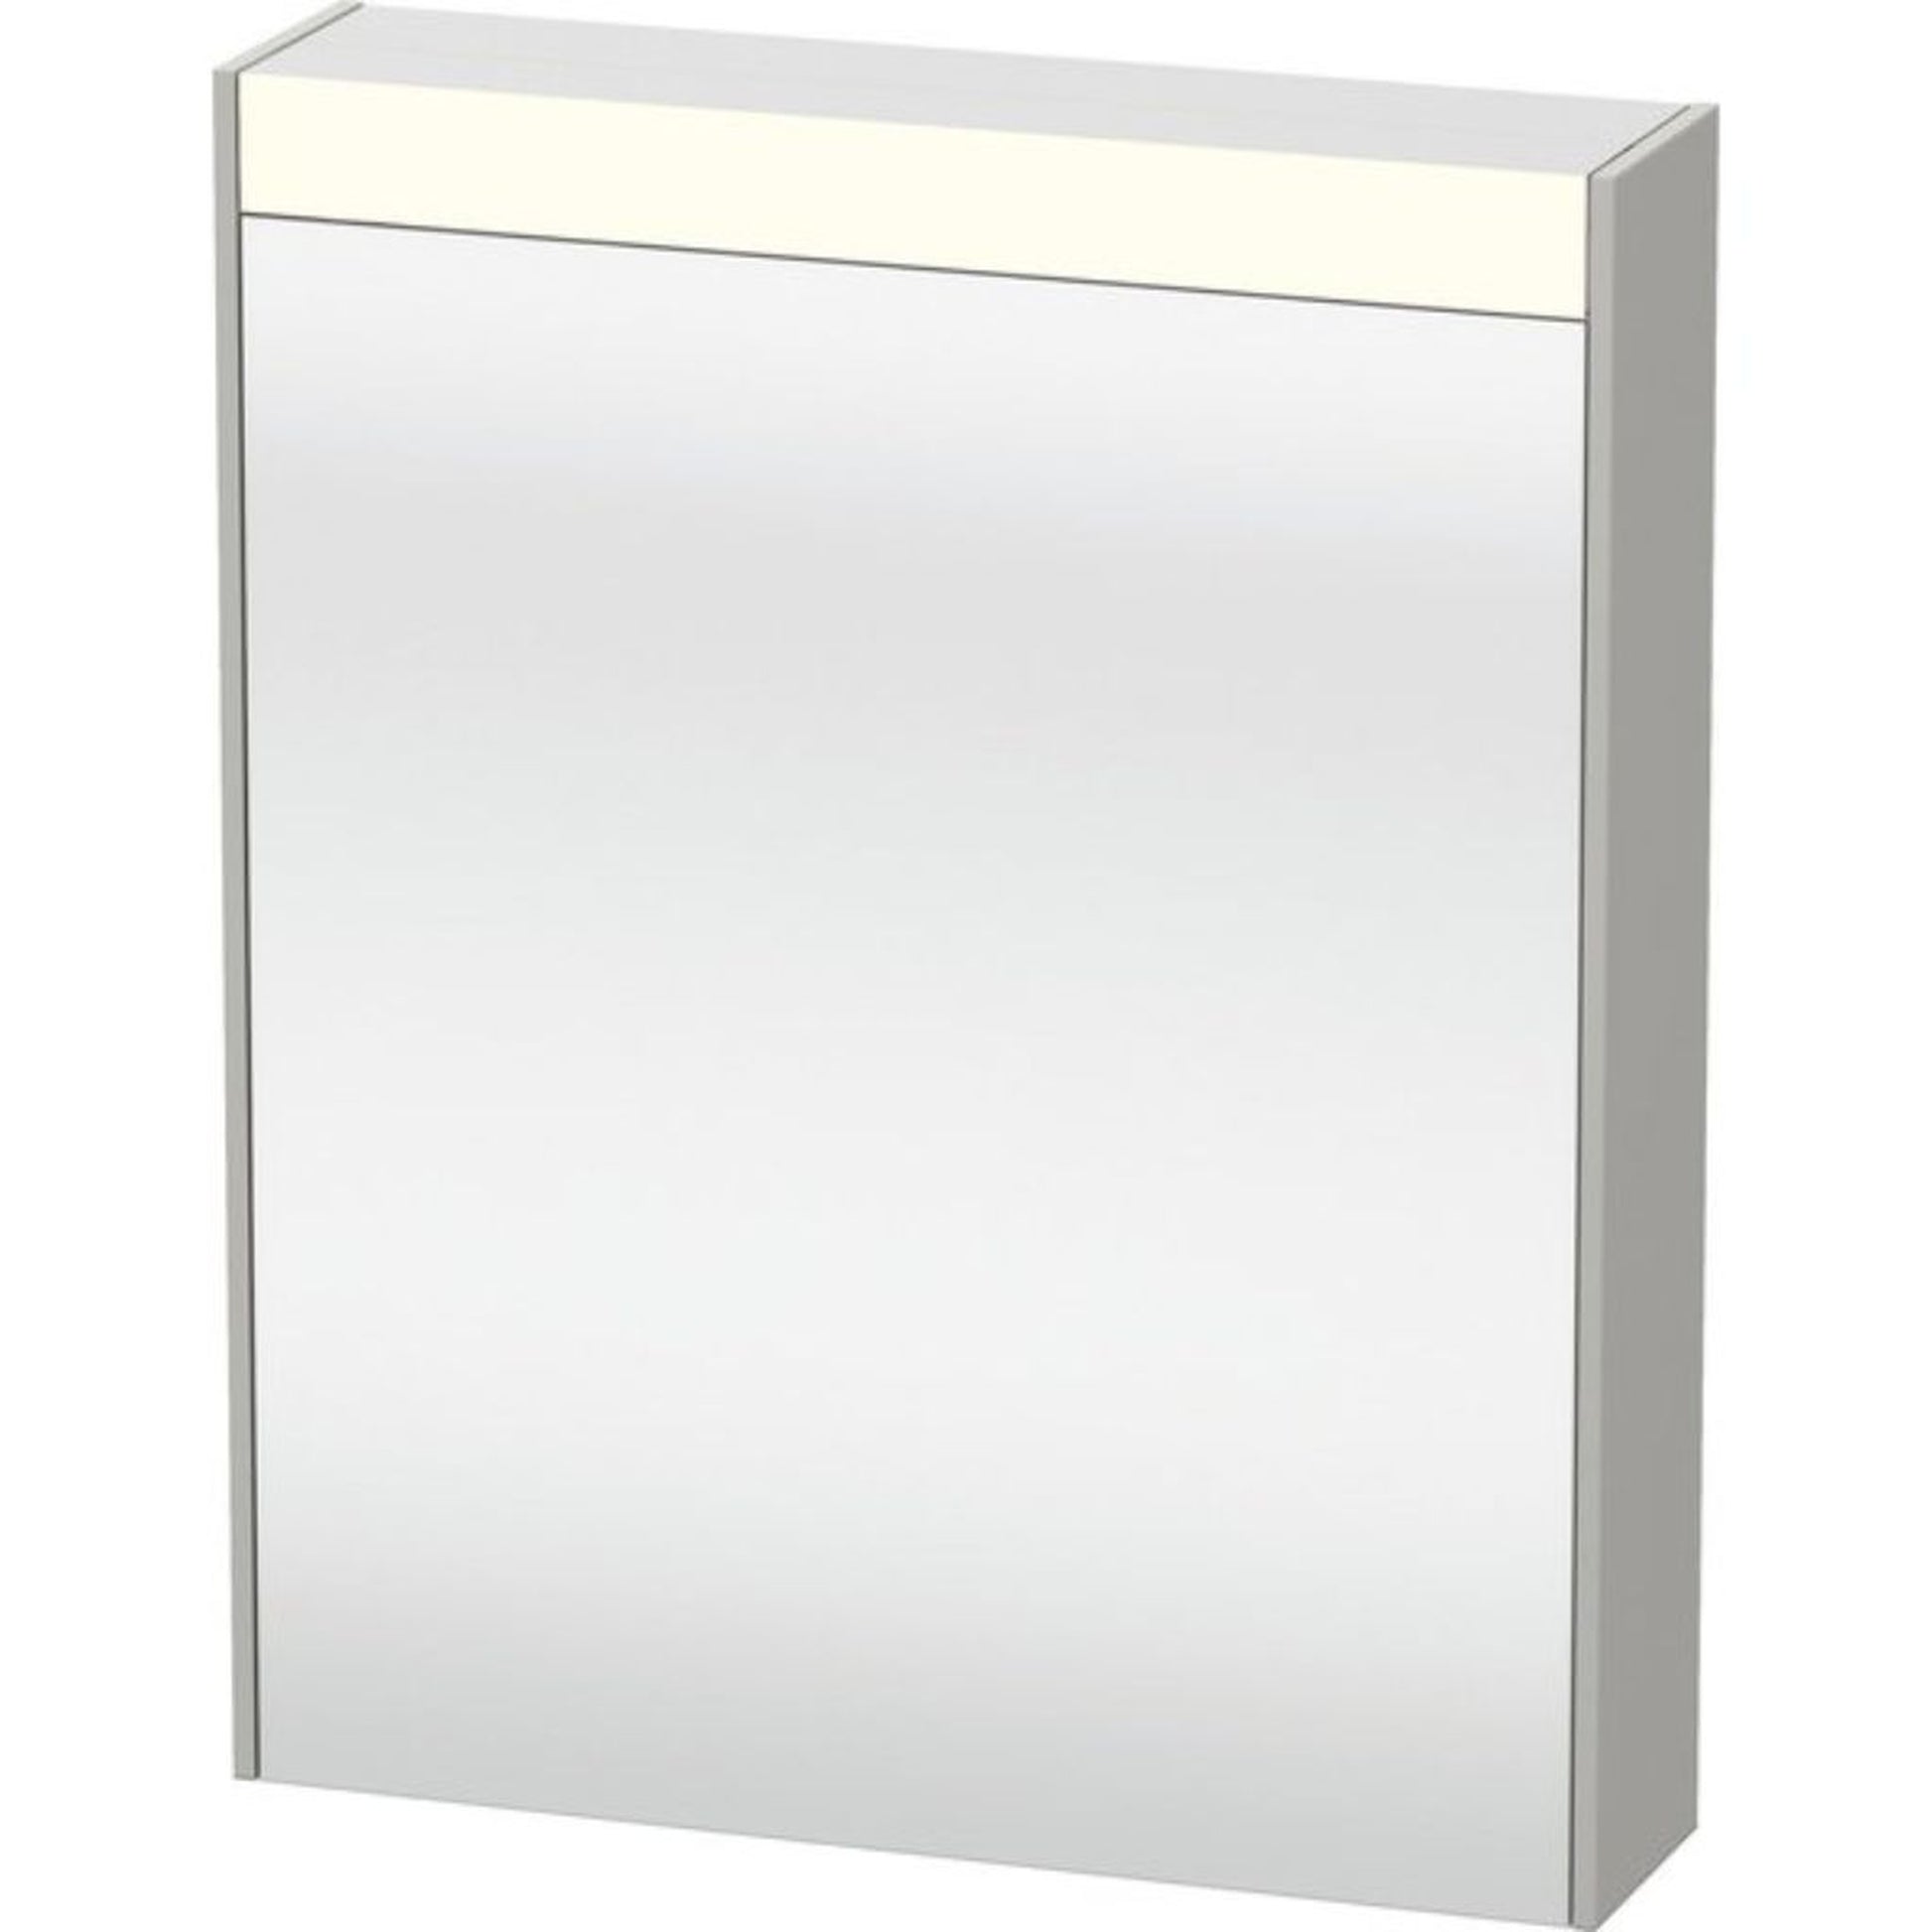 Duravit Brioso 24" x 30" x 6" Mirror With Right Hinge Cabinet and Lighting Concrete Grey Matt